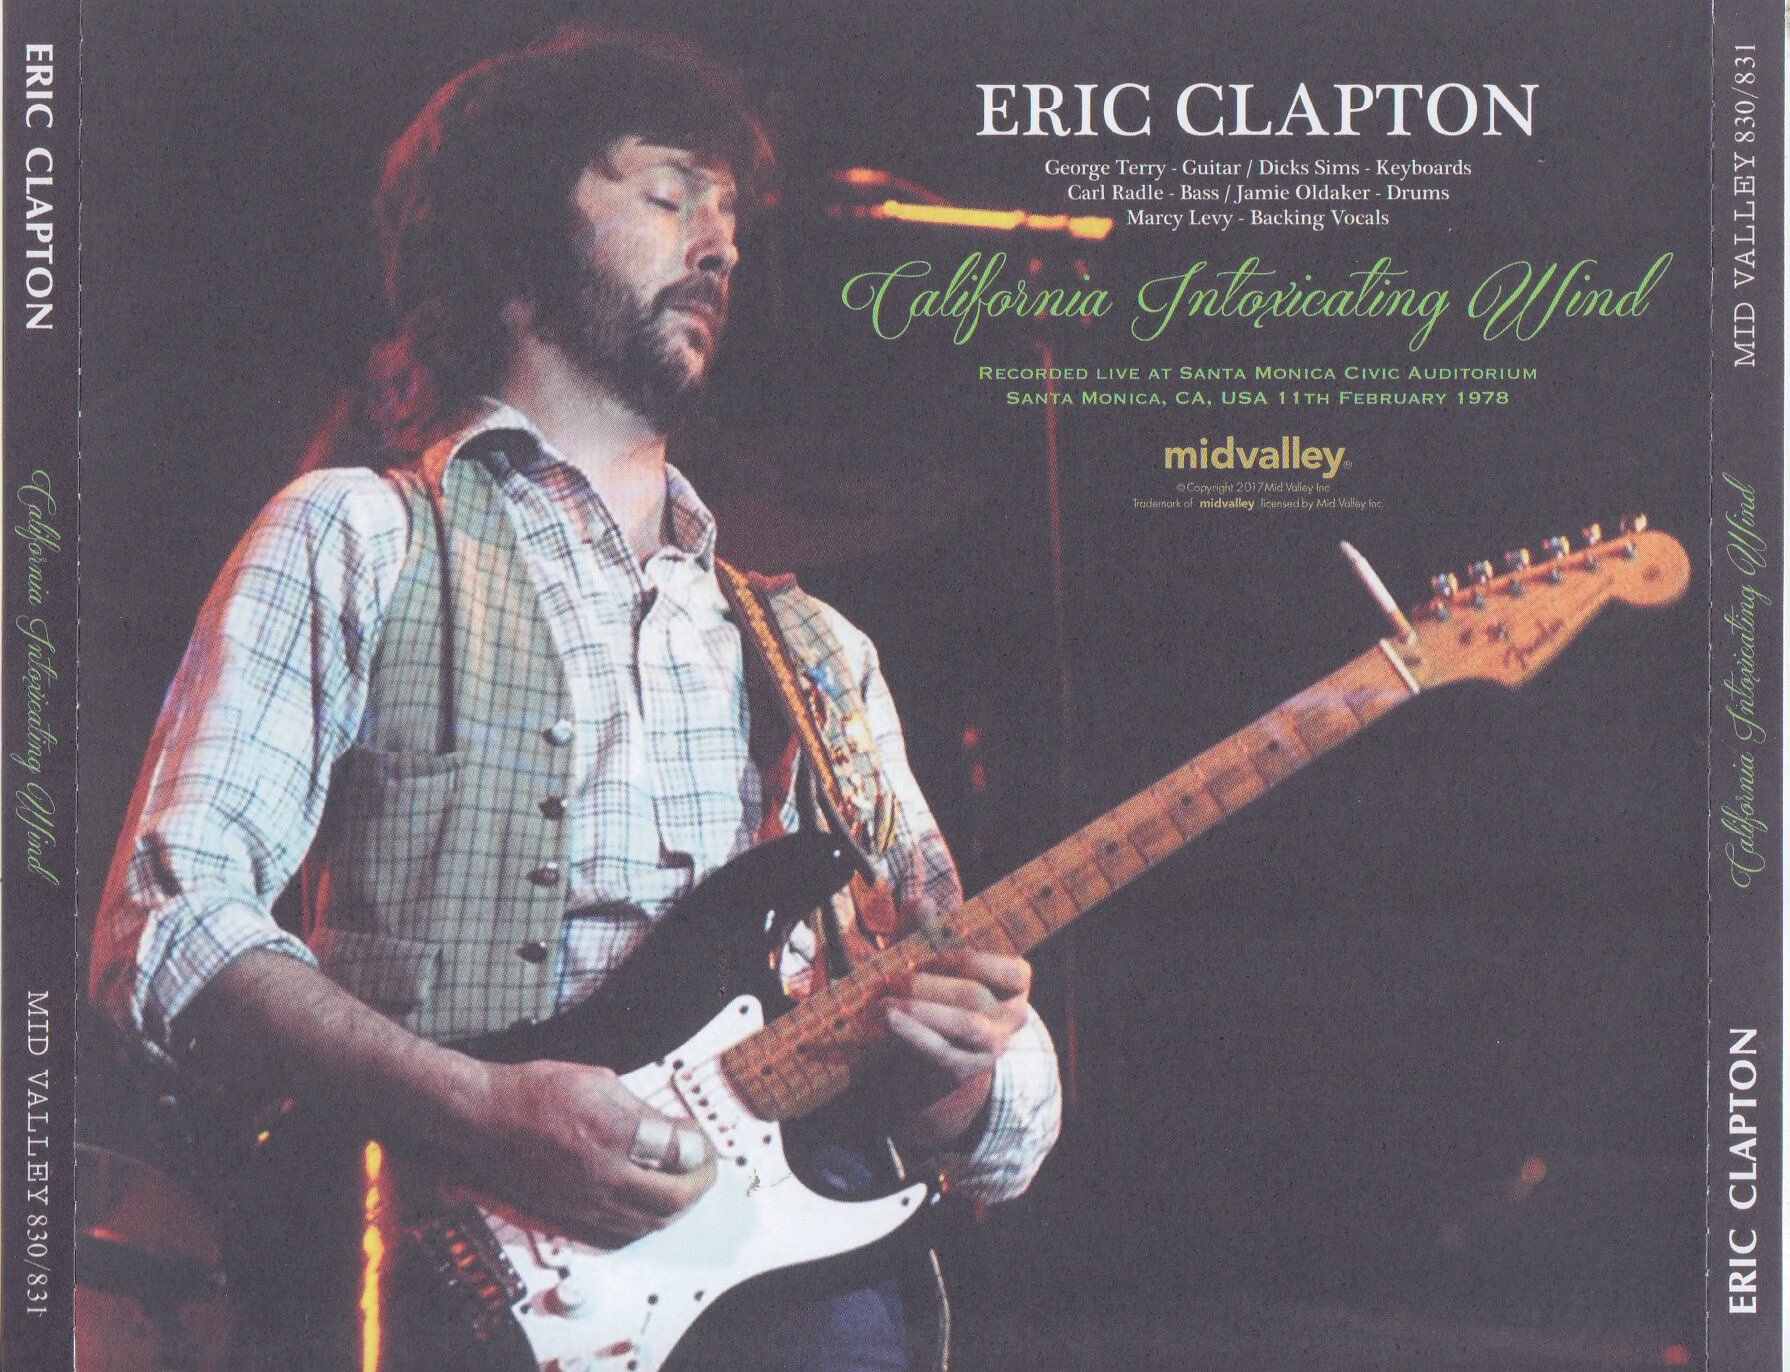 CALIFORNIA, USA – The Cream of Clapton Band